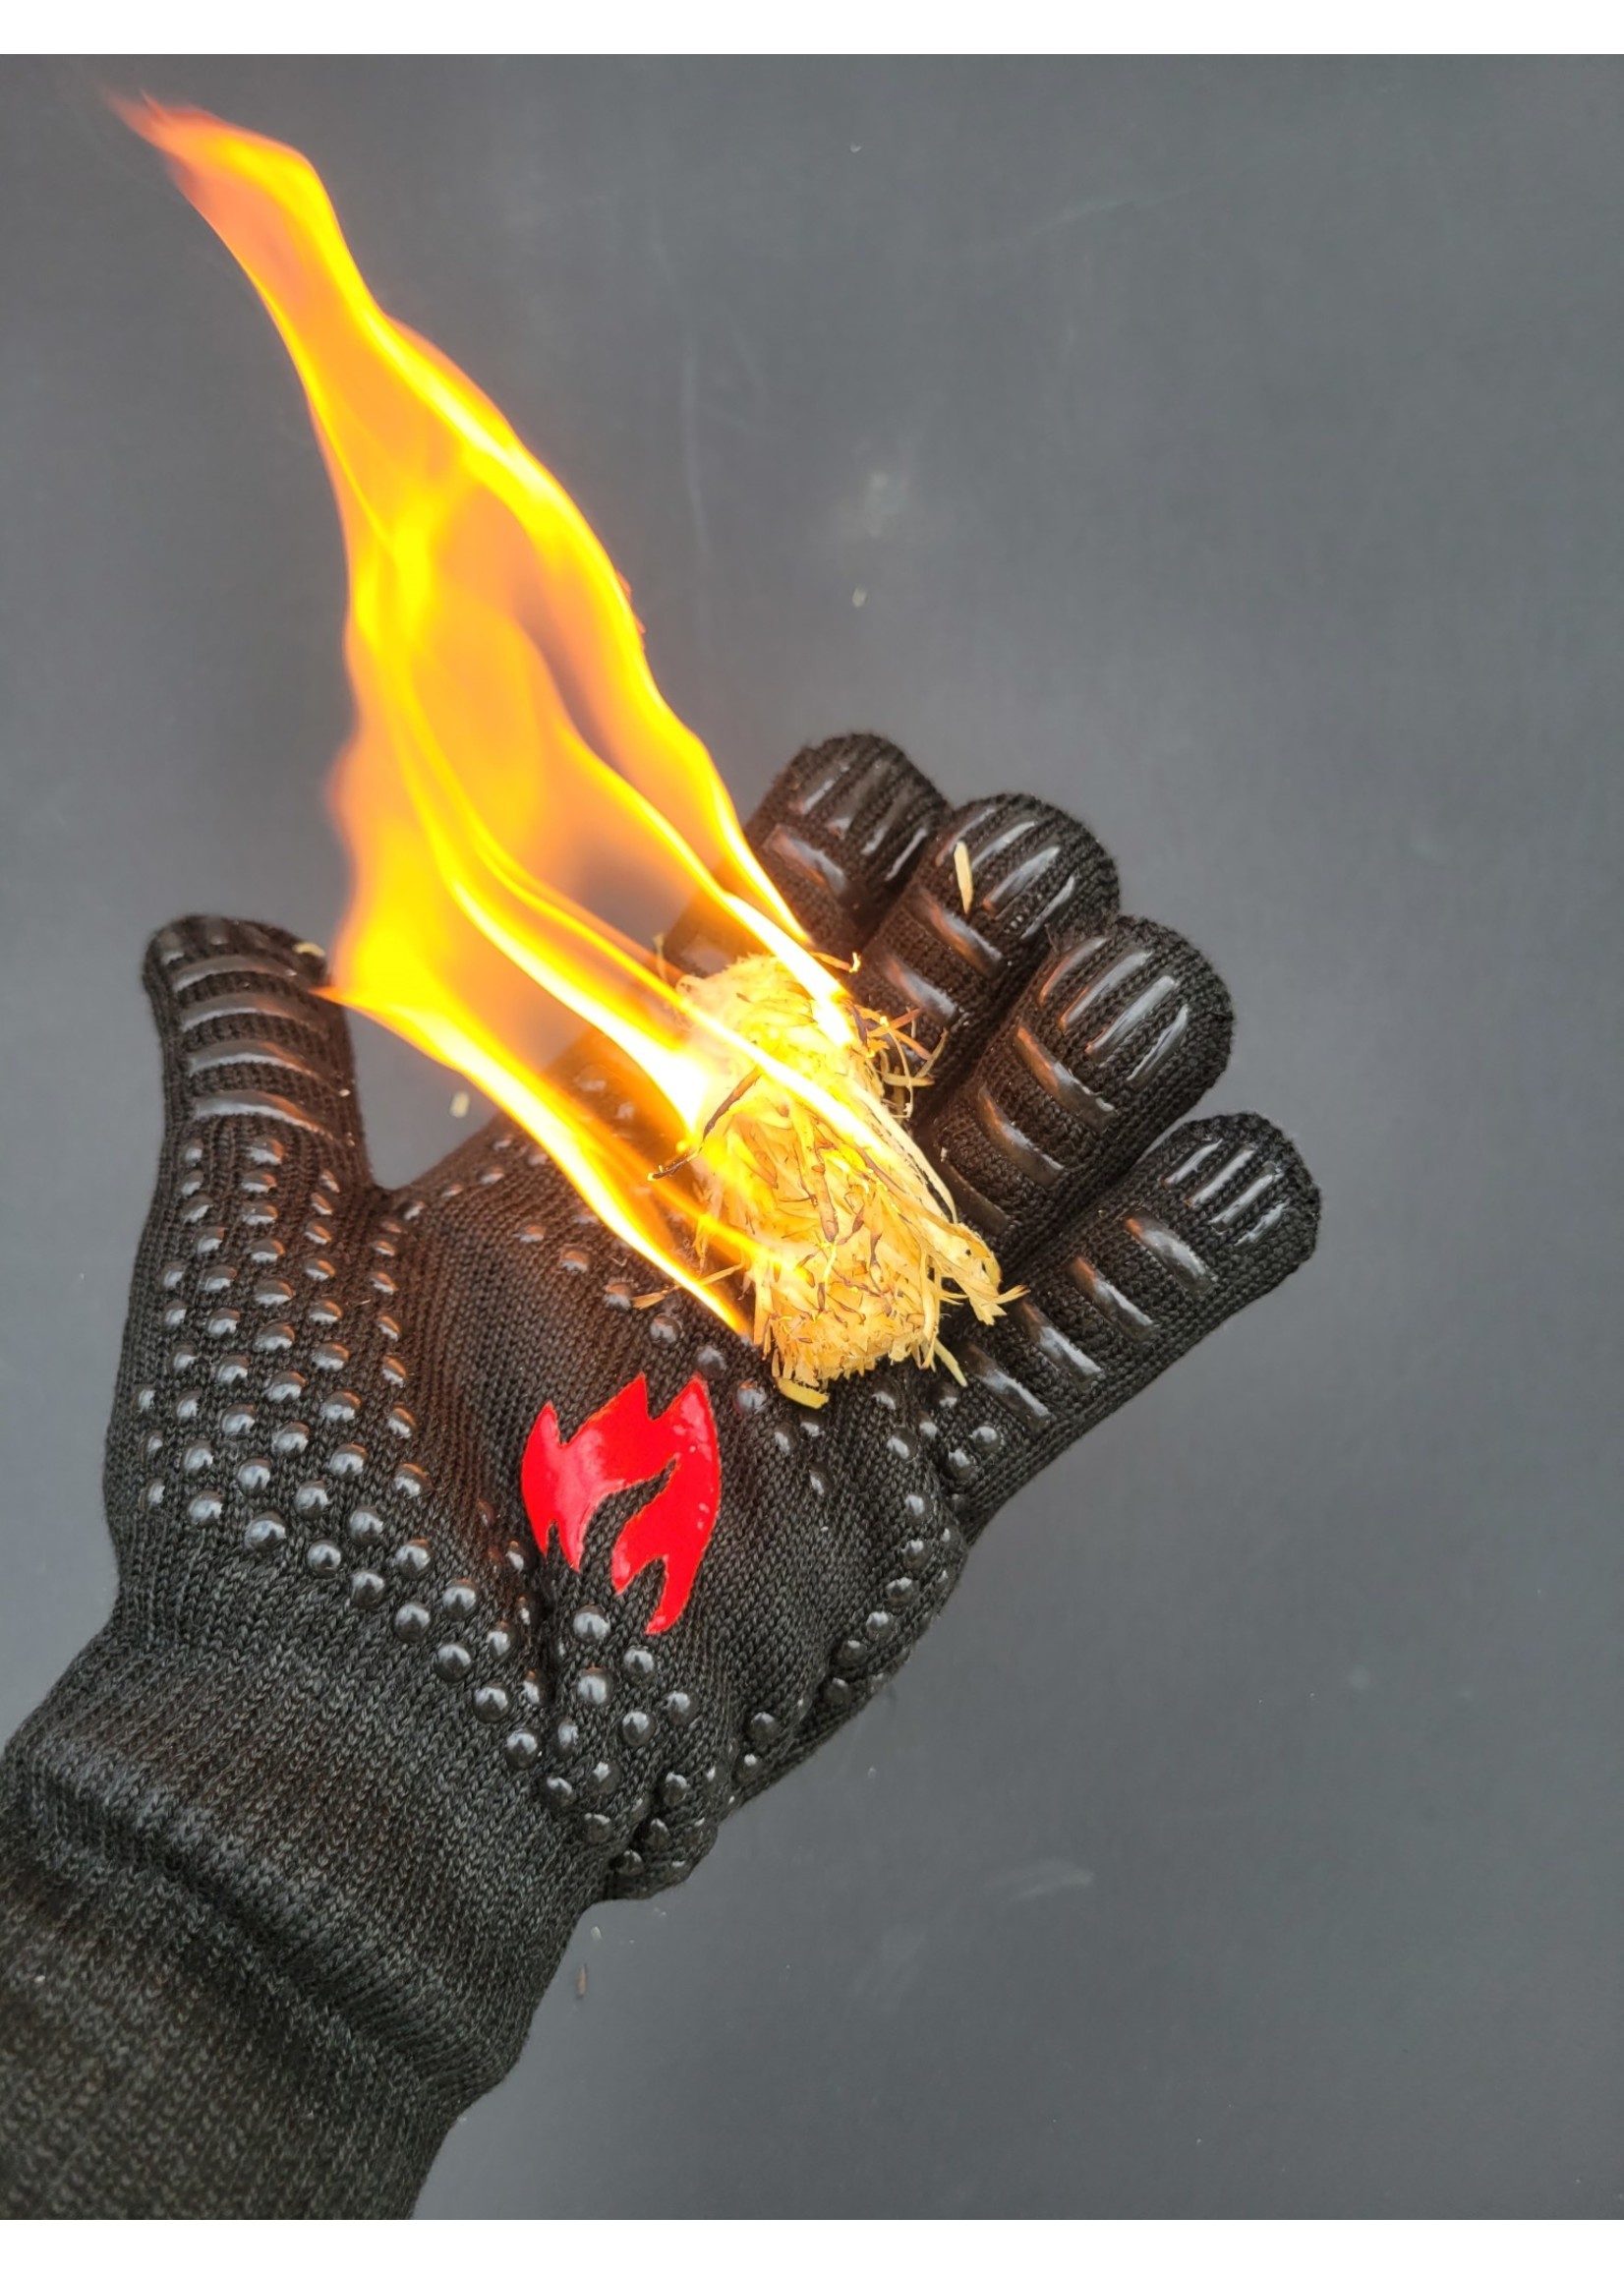 alibaba High Heat Gloves